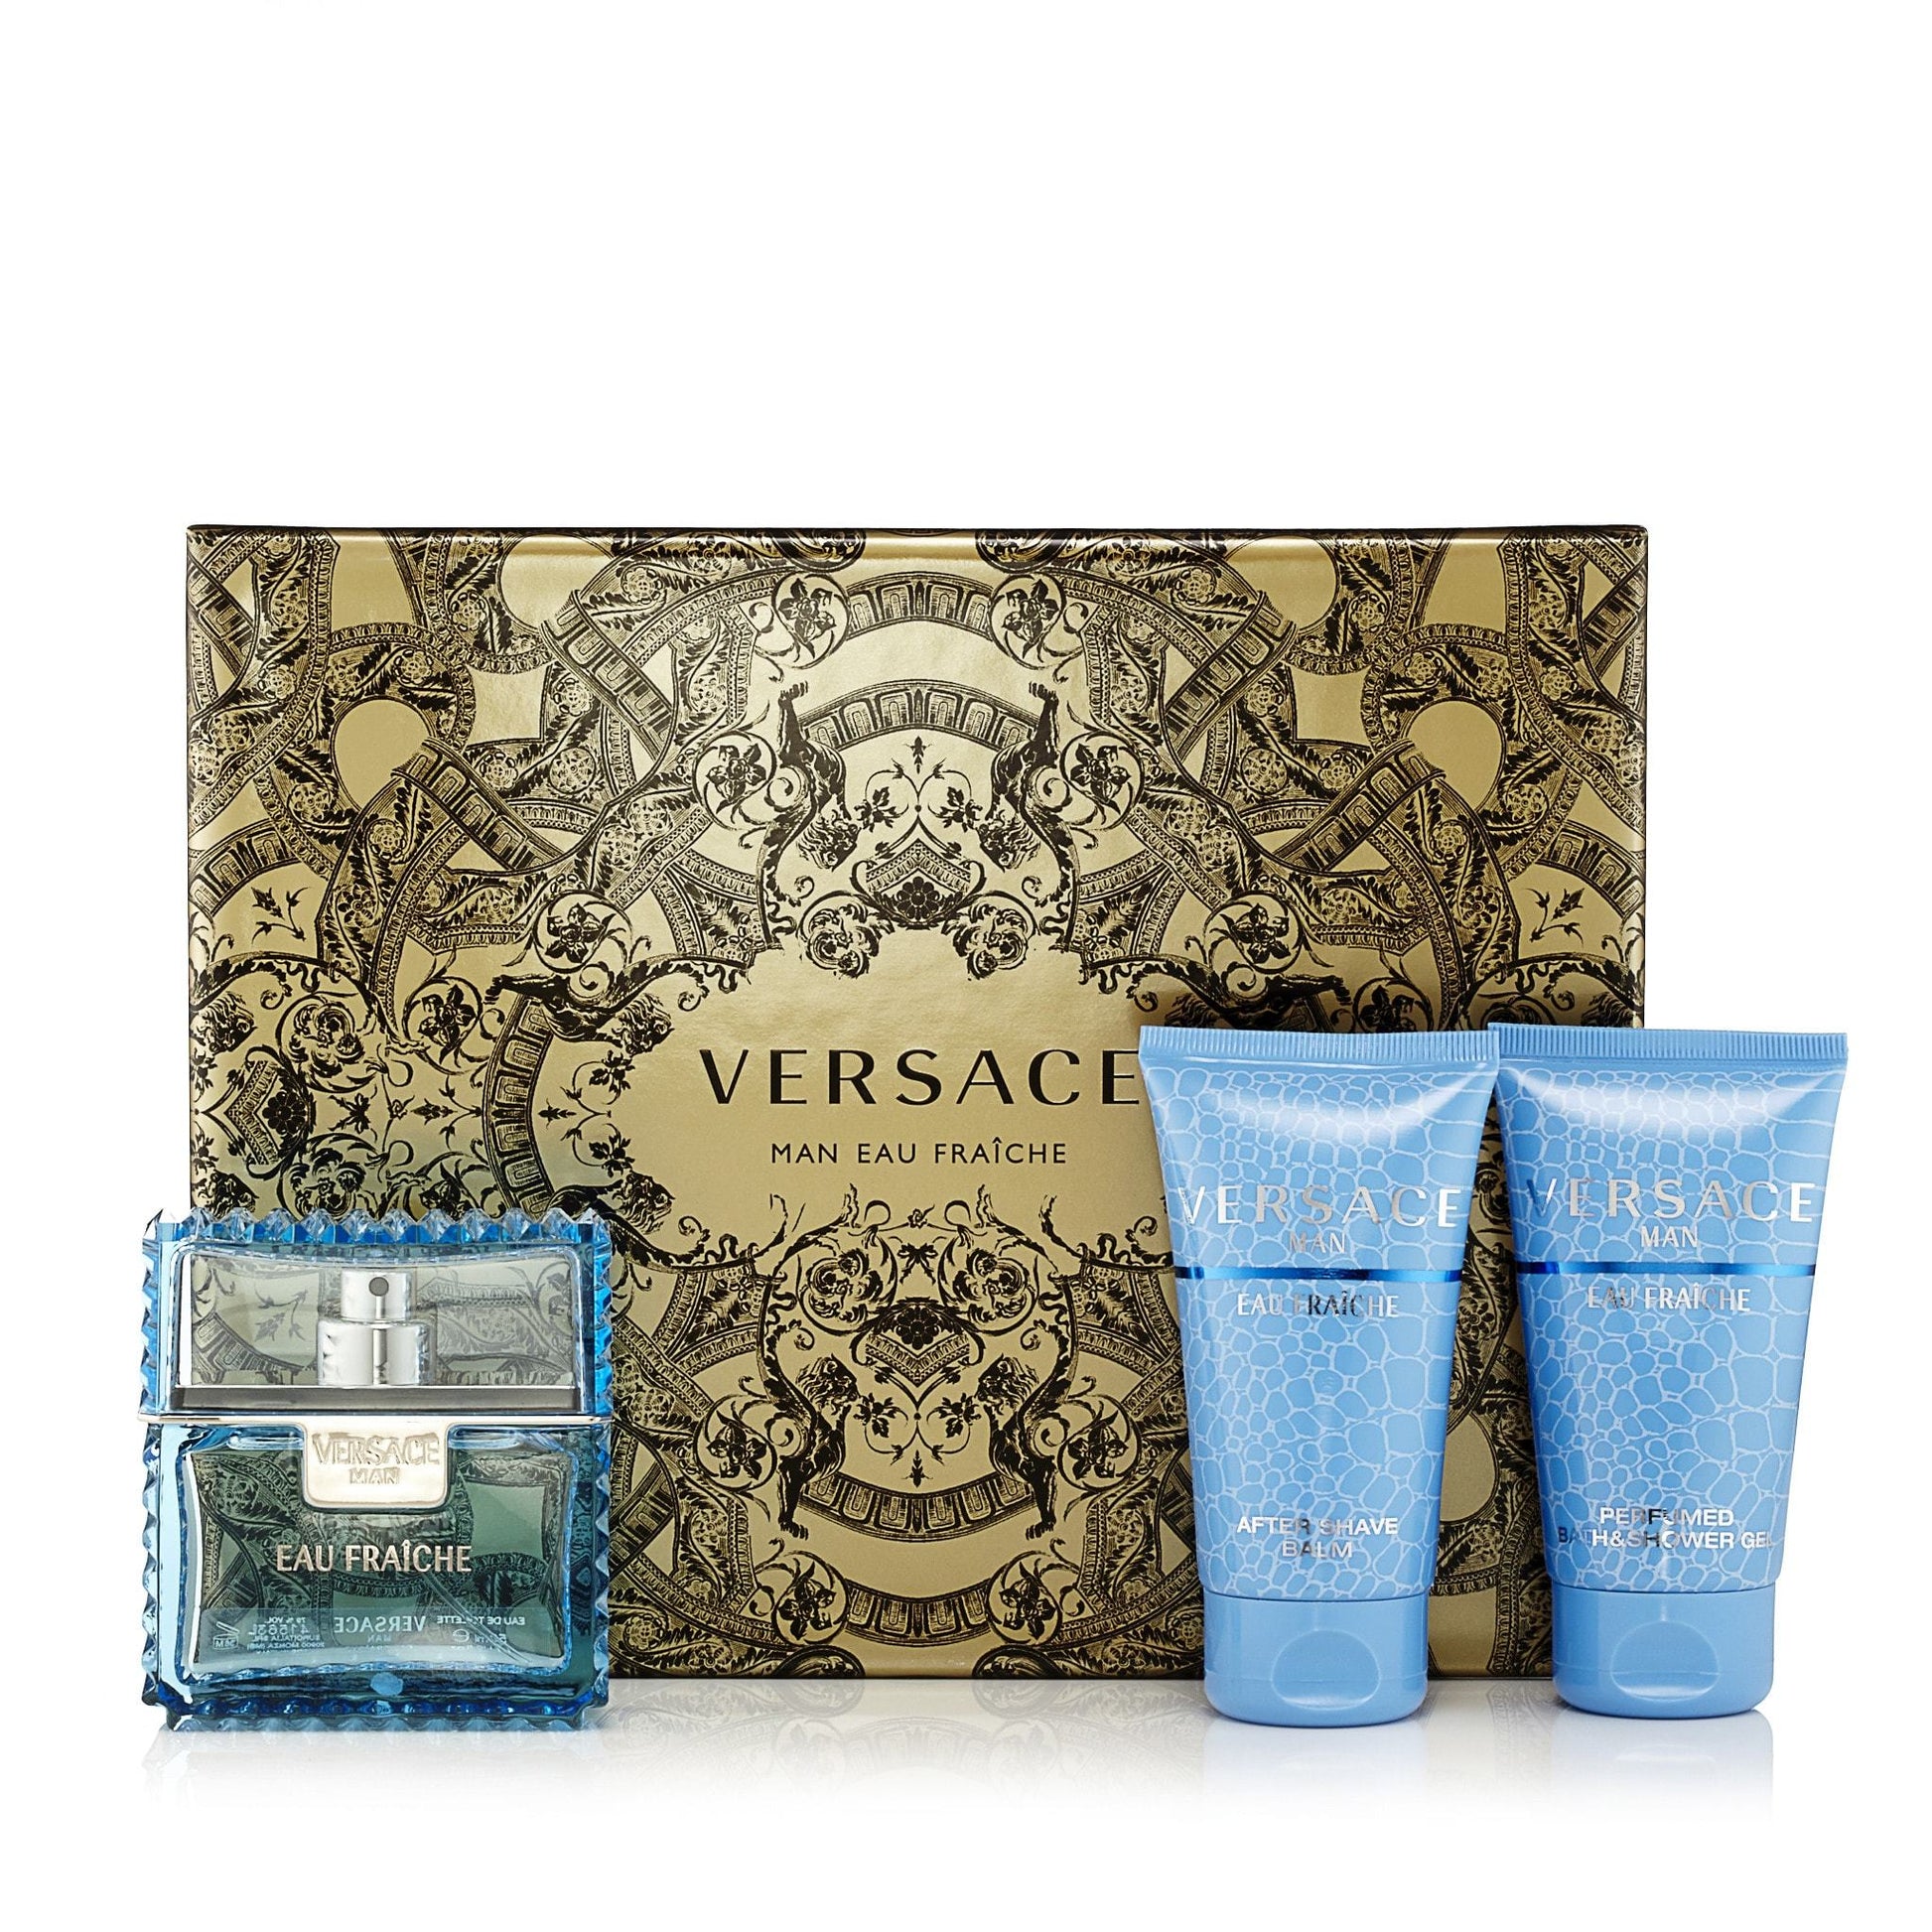 Man Eau Fraiche Gift Set for Men by Versace, Product image 2